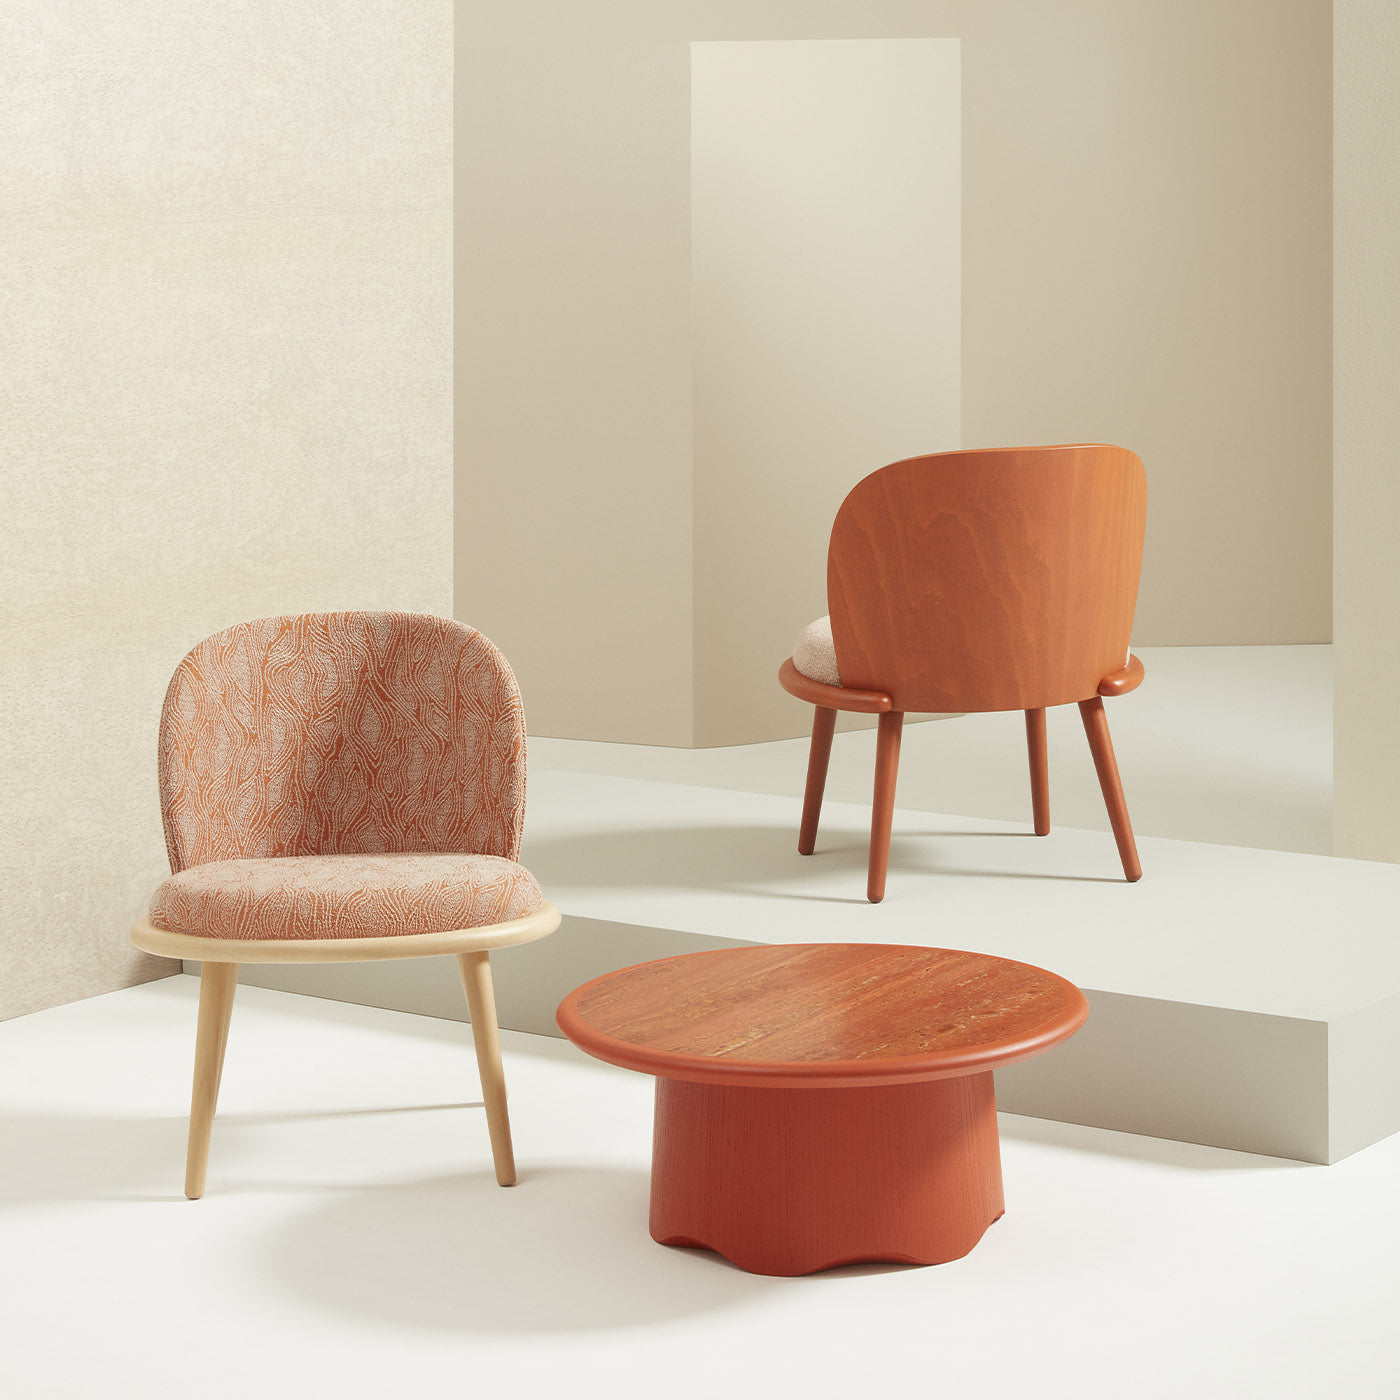 Veretta 927 Patterned Lounge Chair by Cristina Celestino - Alternative view 2